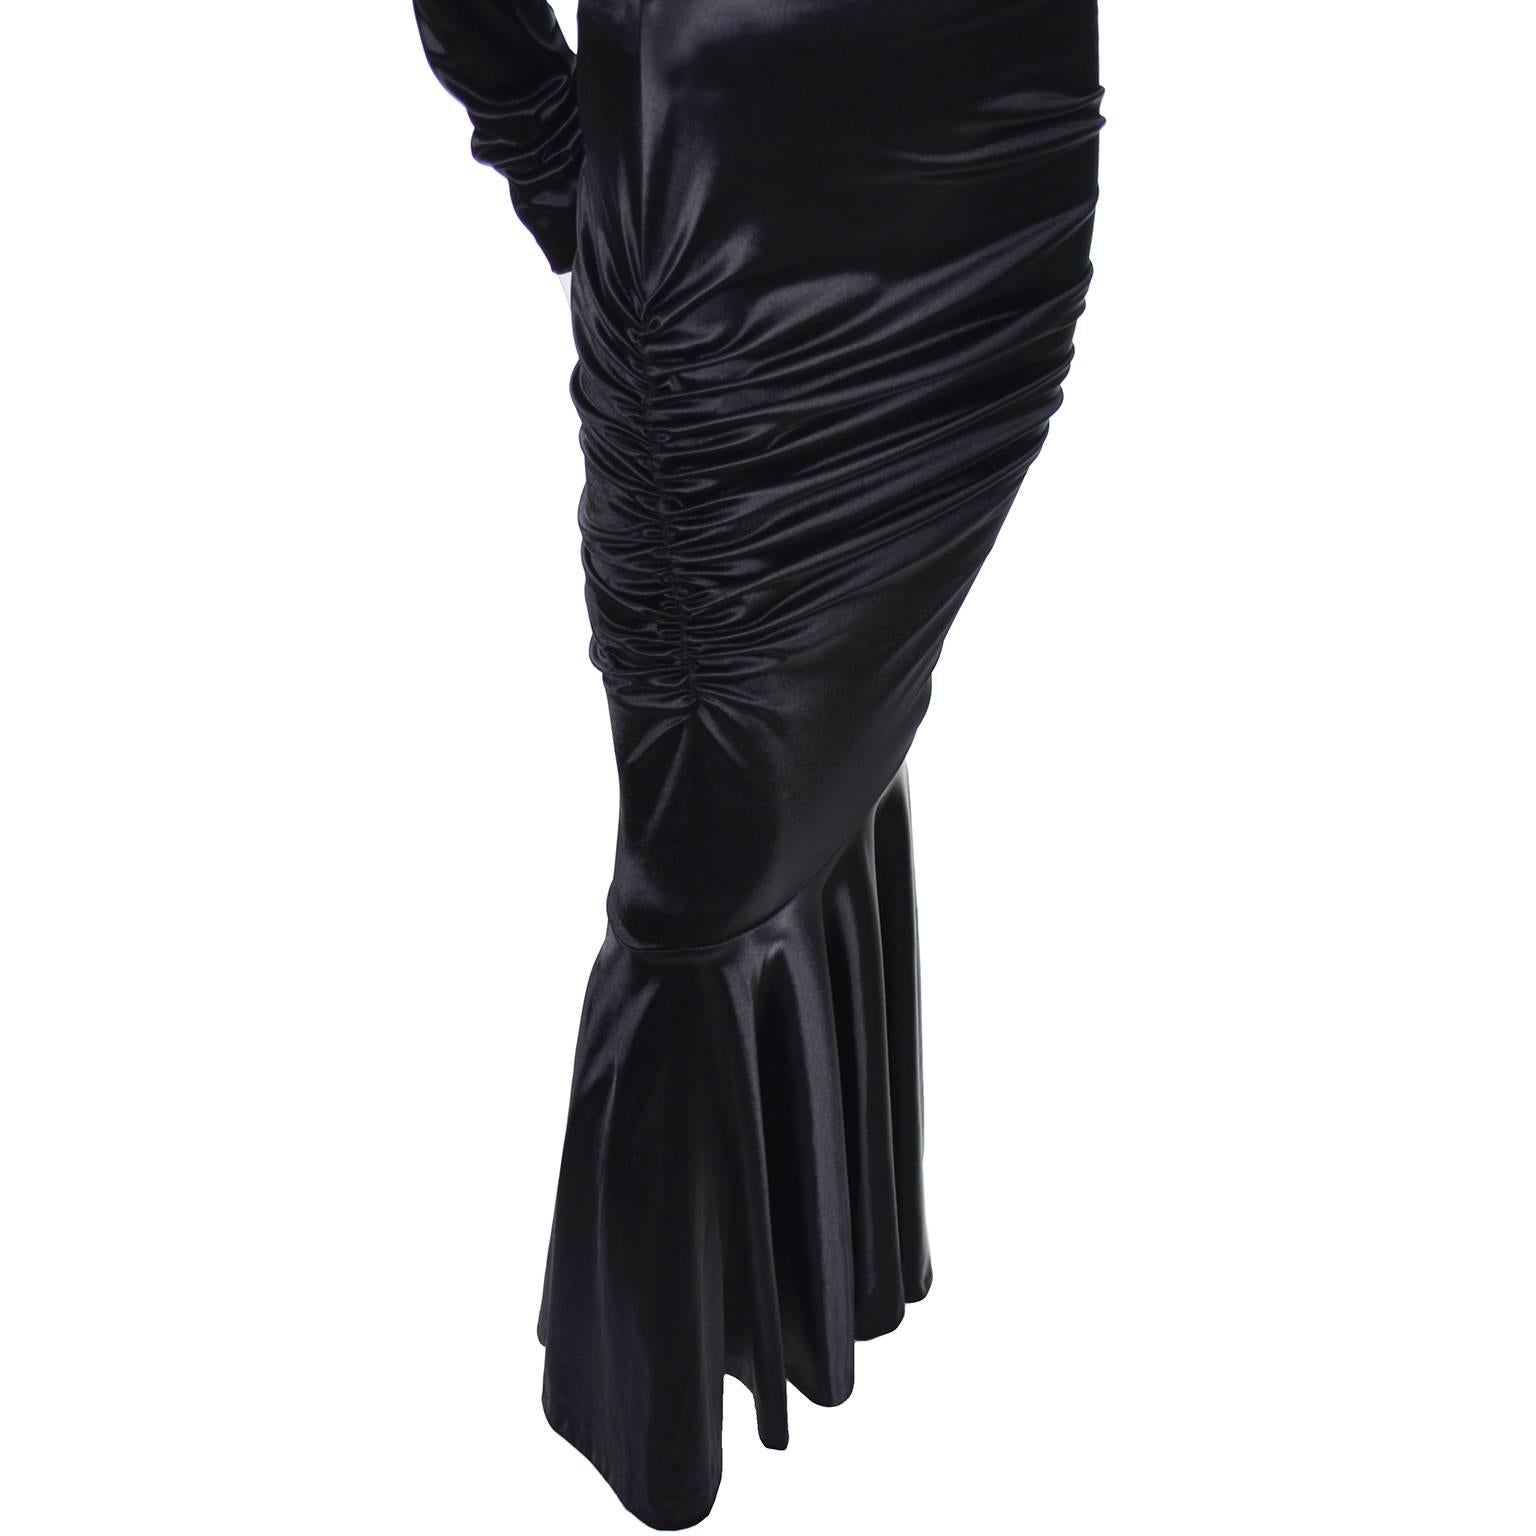 Black Patrick Kelly Paris 1988 Vintage Dress Stretch Body Con Statement Evening Gown